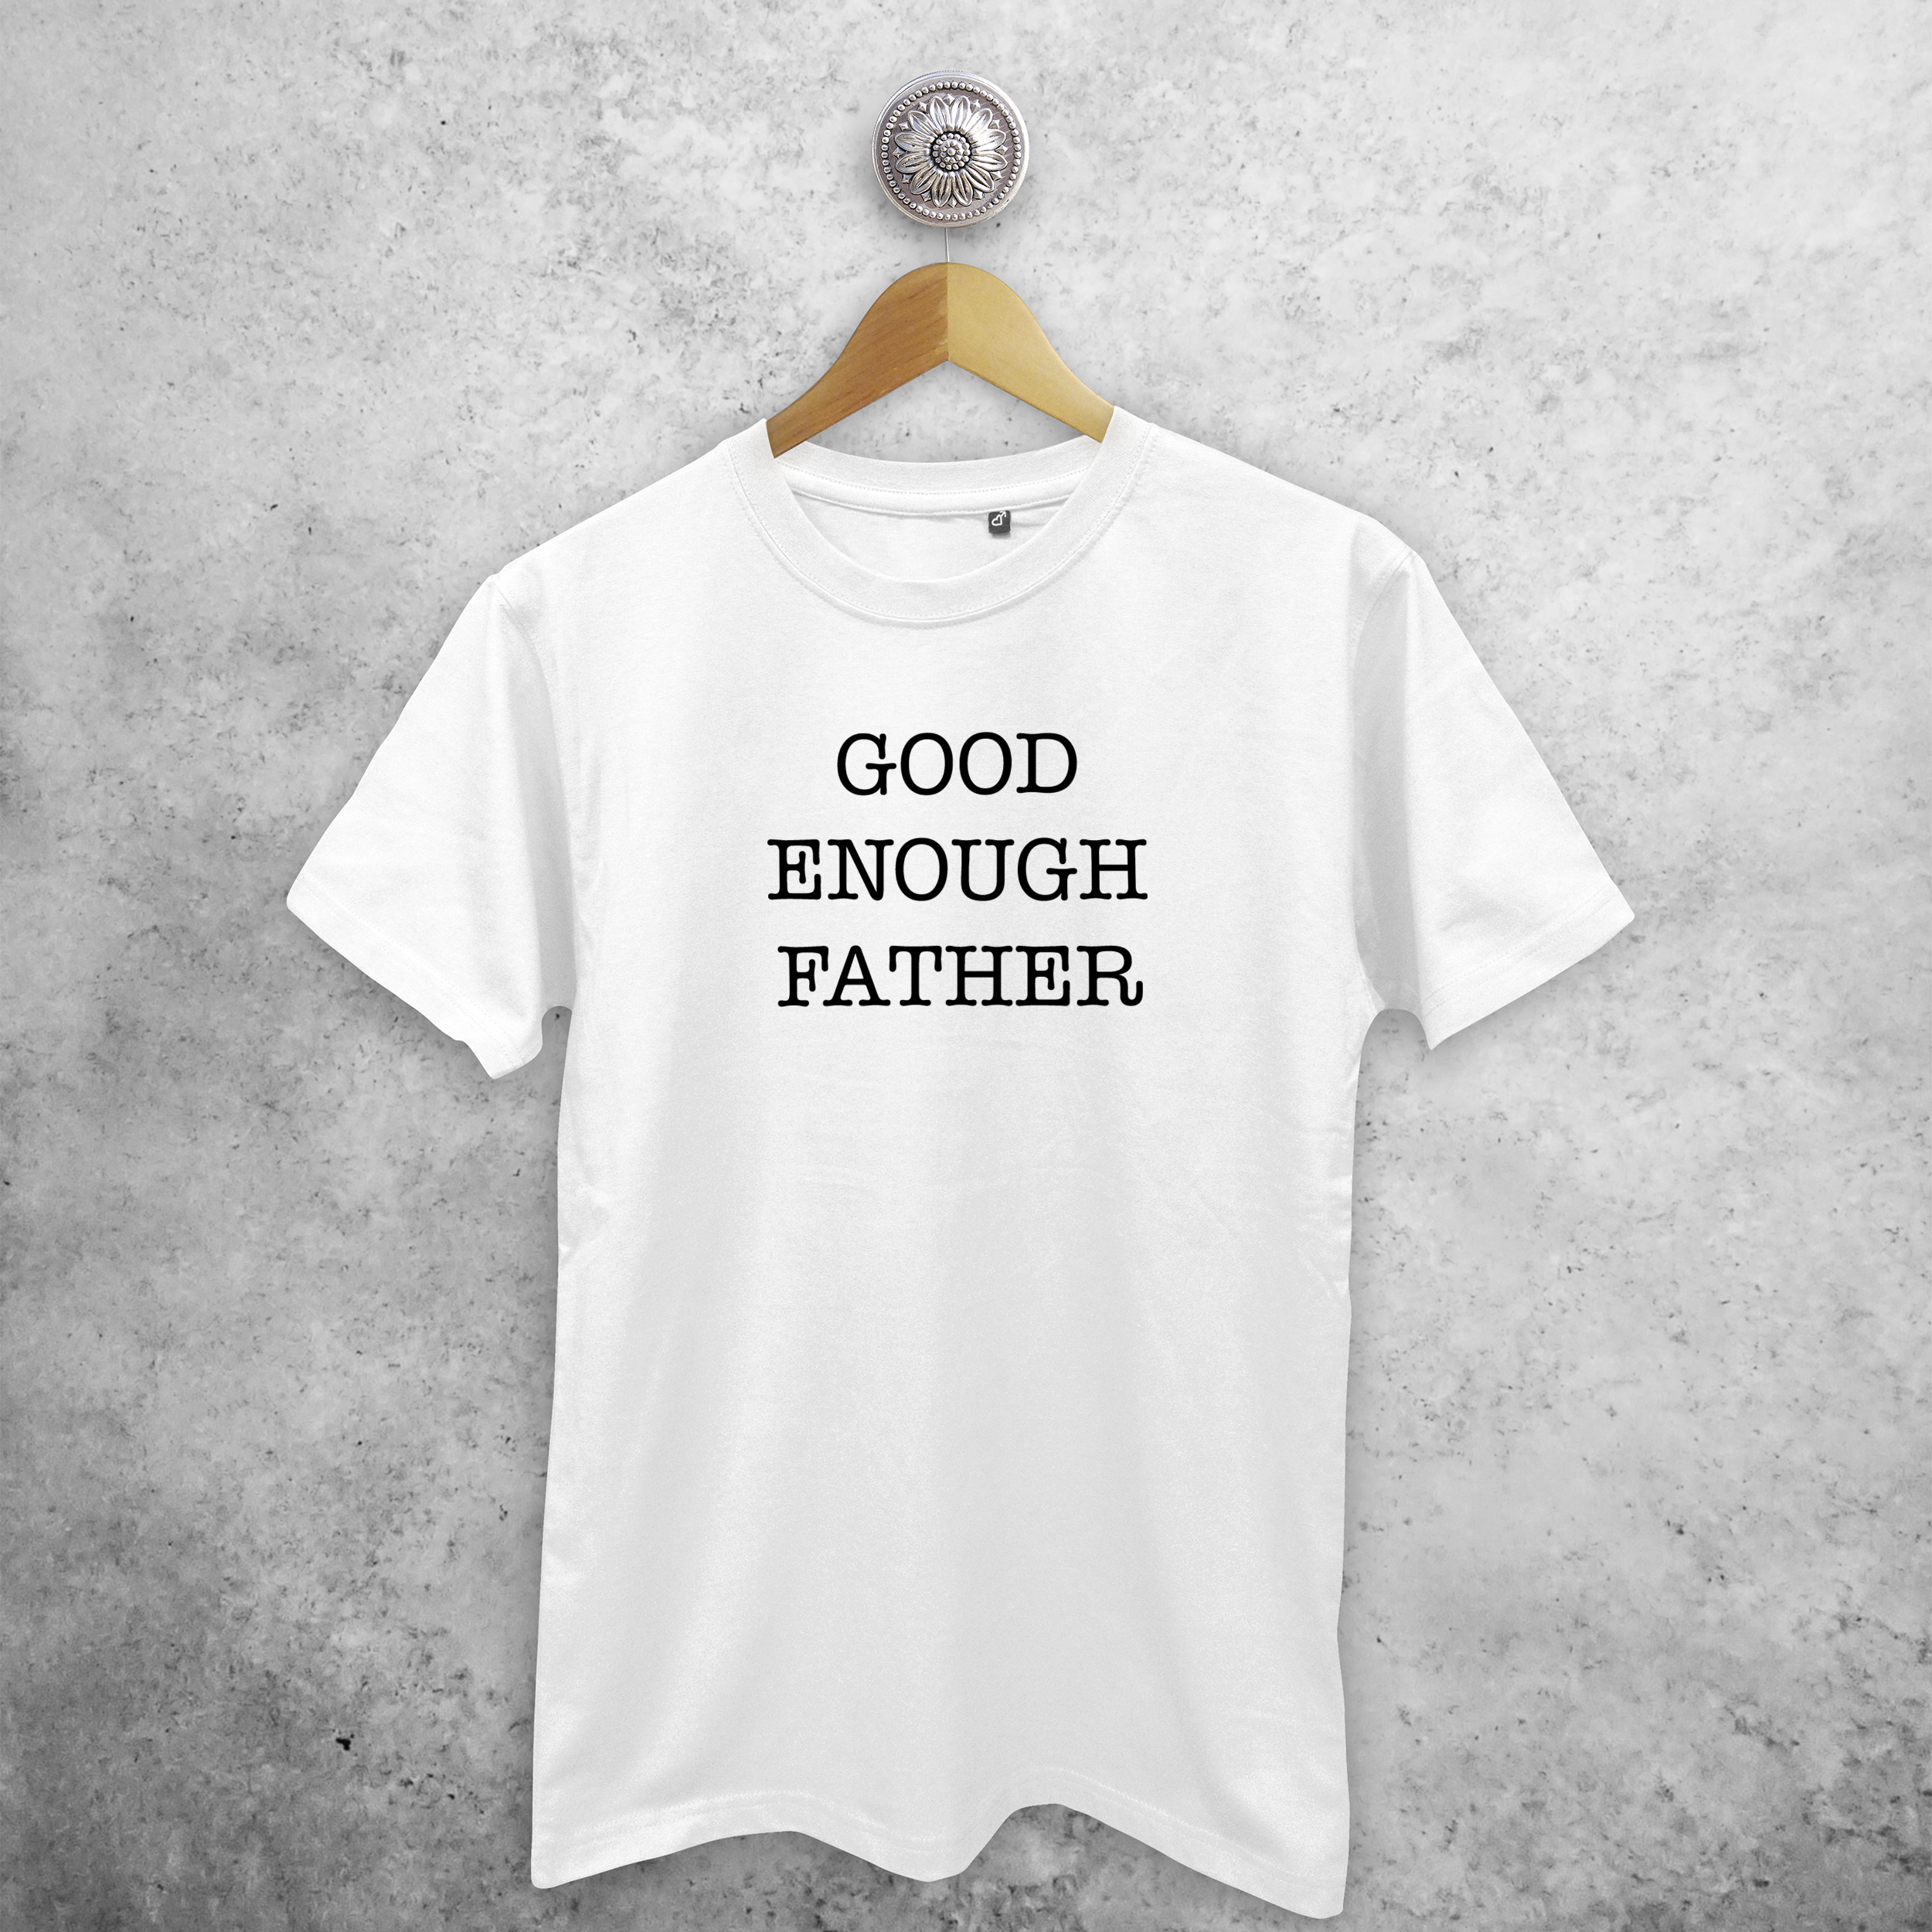 'Good enough father' adult shirt